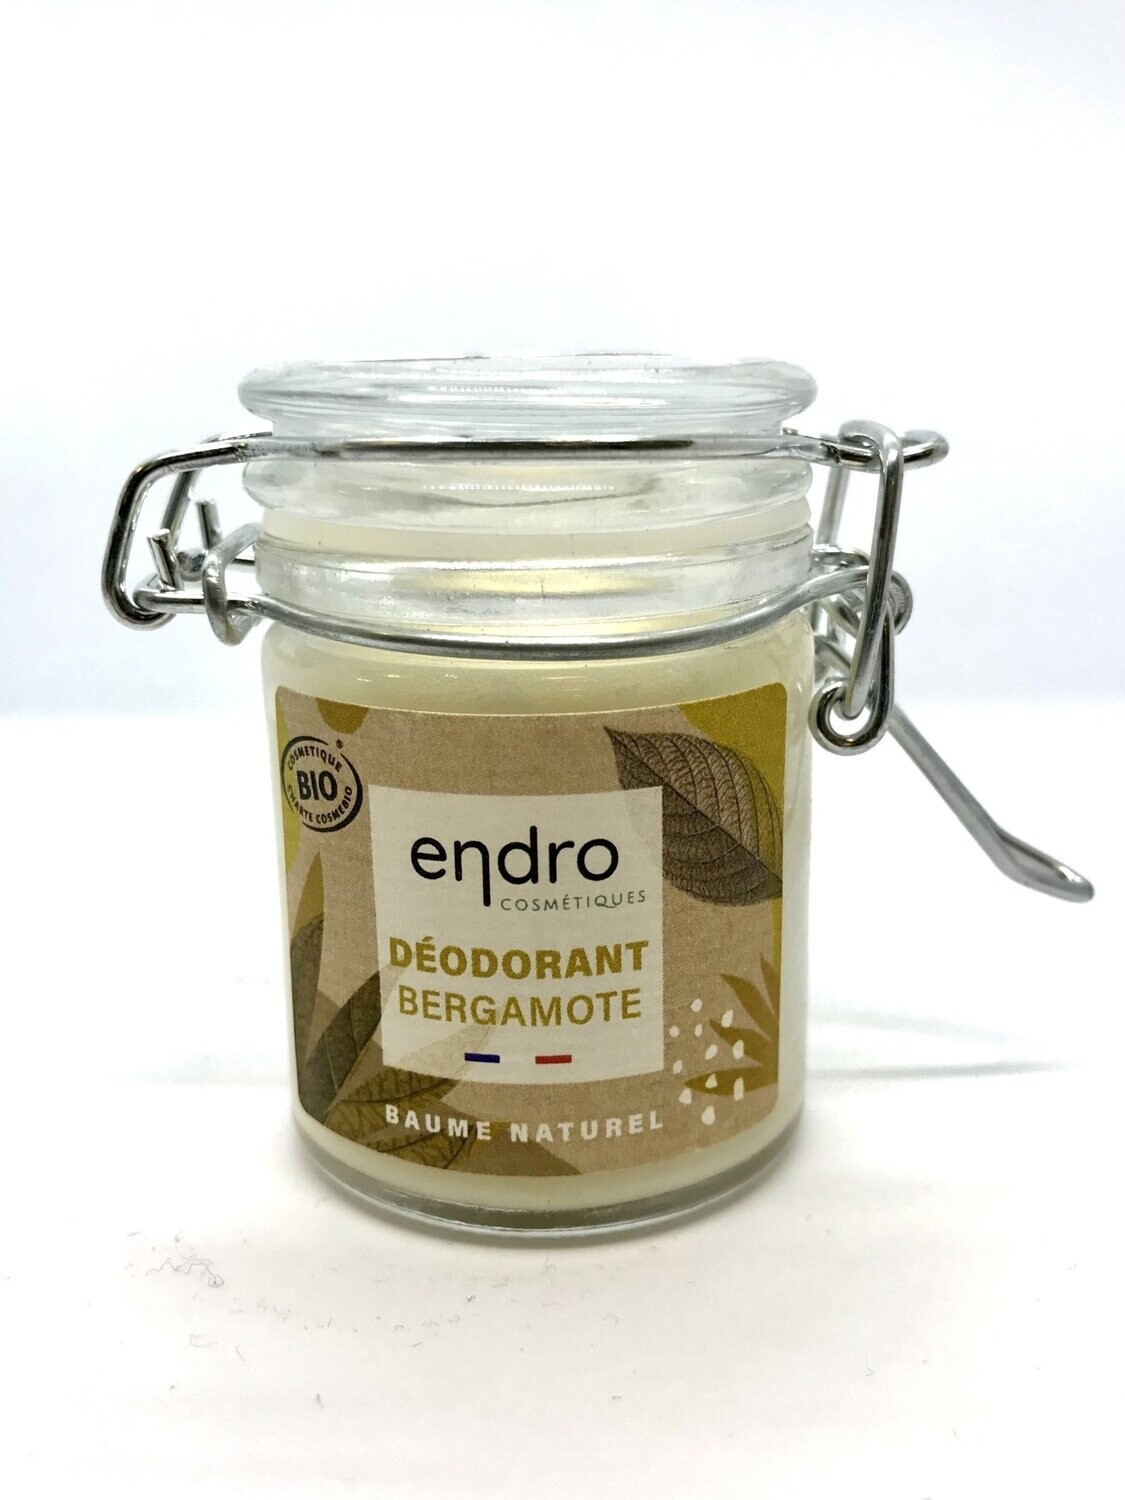 Déodorant bergamote Endro